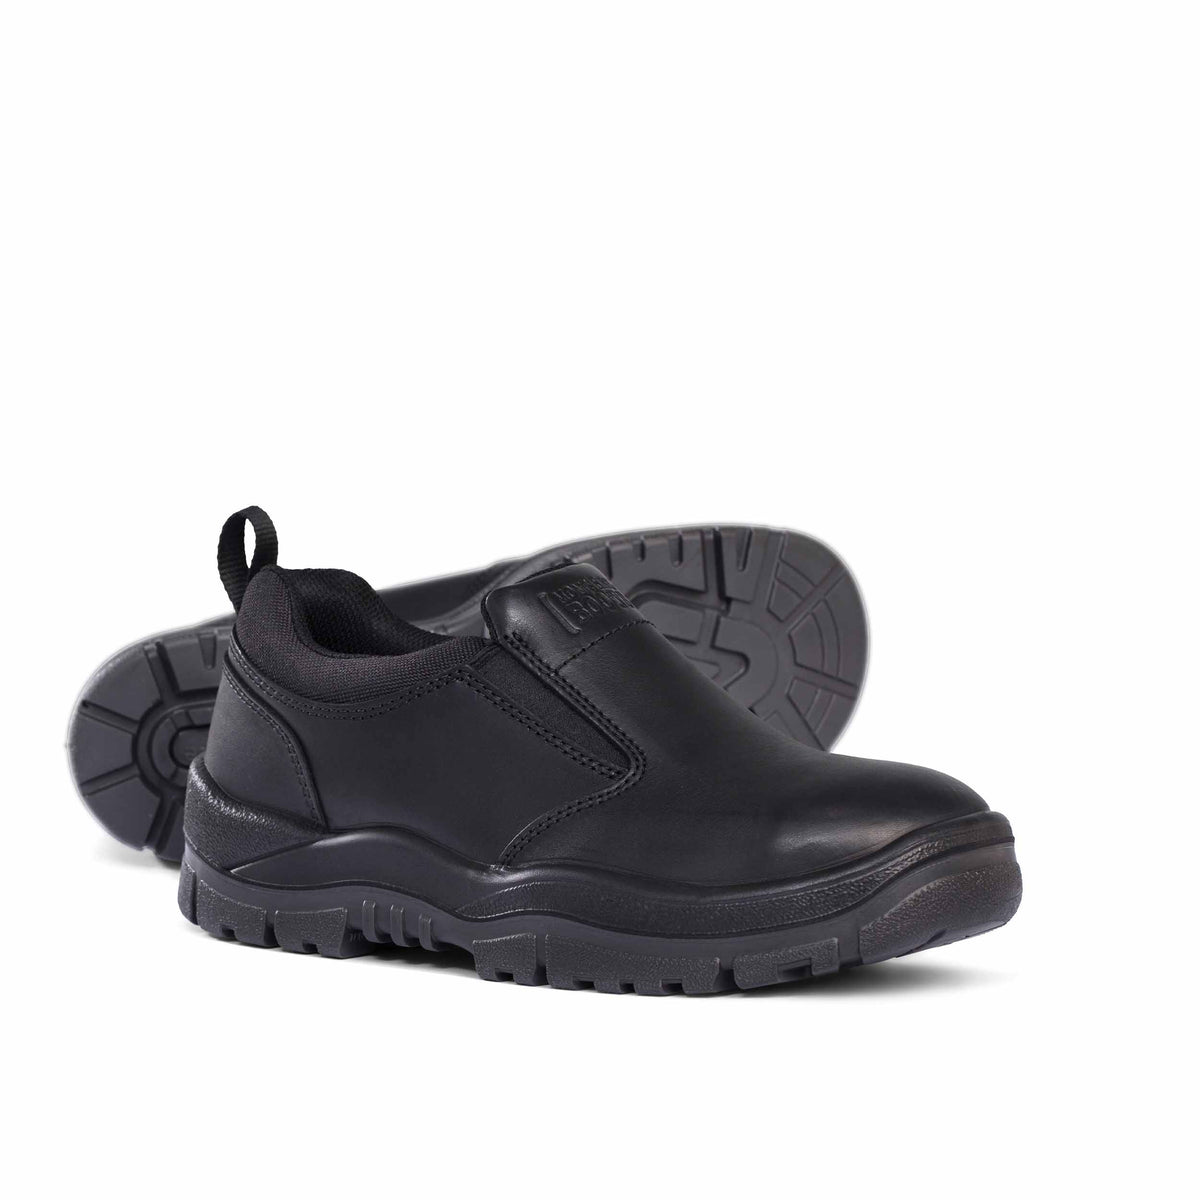 Mongrel 915025 Slip On Work Shoes Black